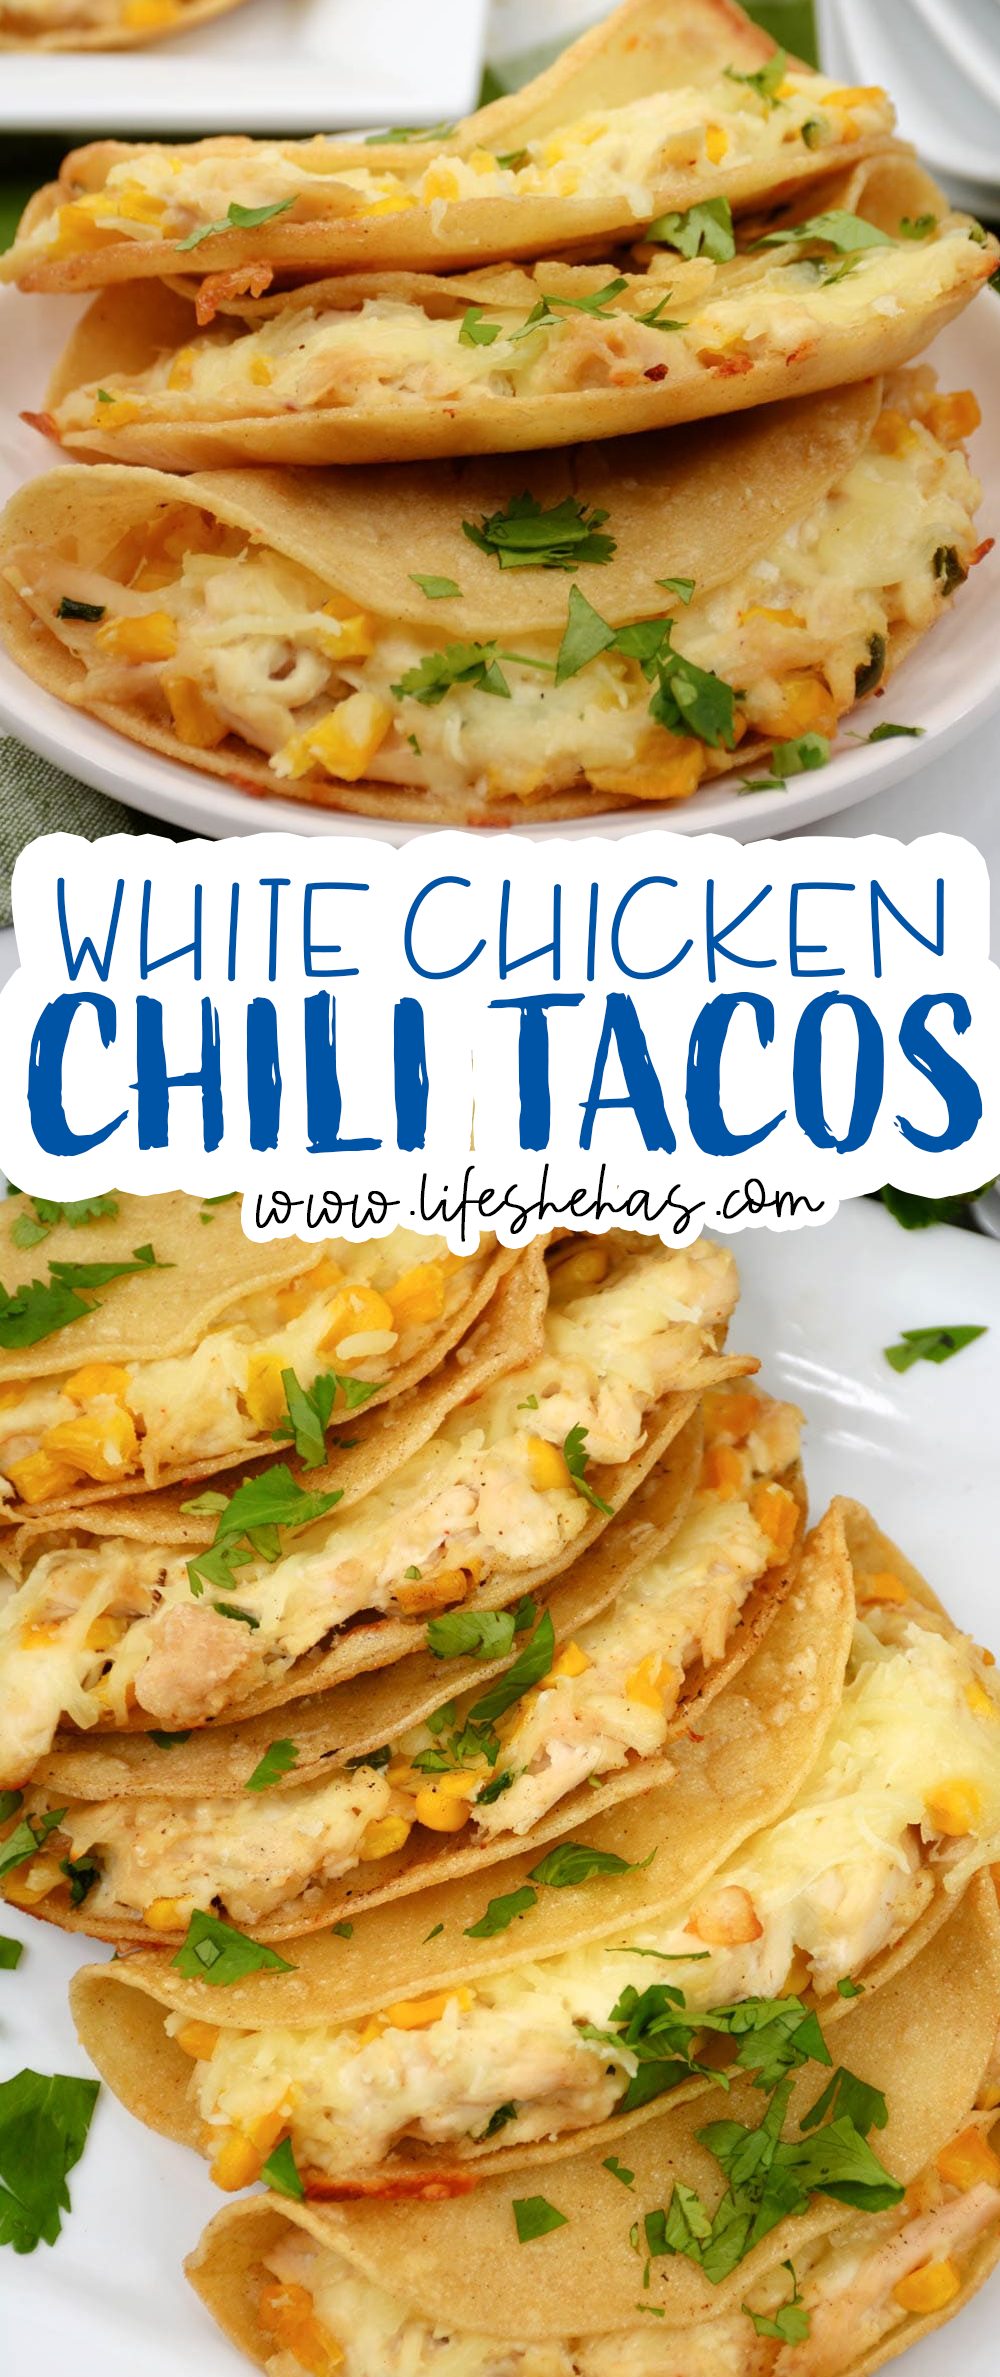 WW White Chicken Chili Tacos